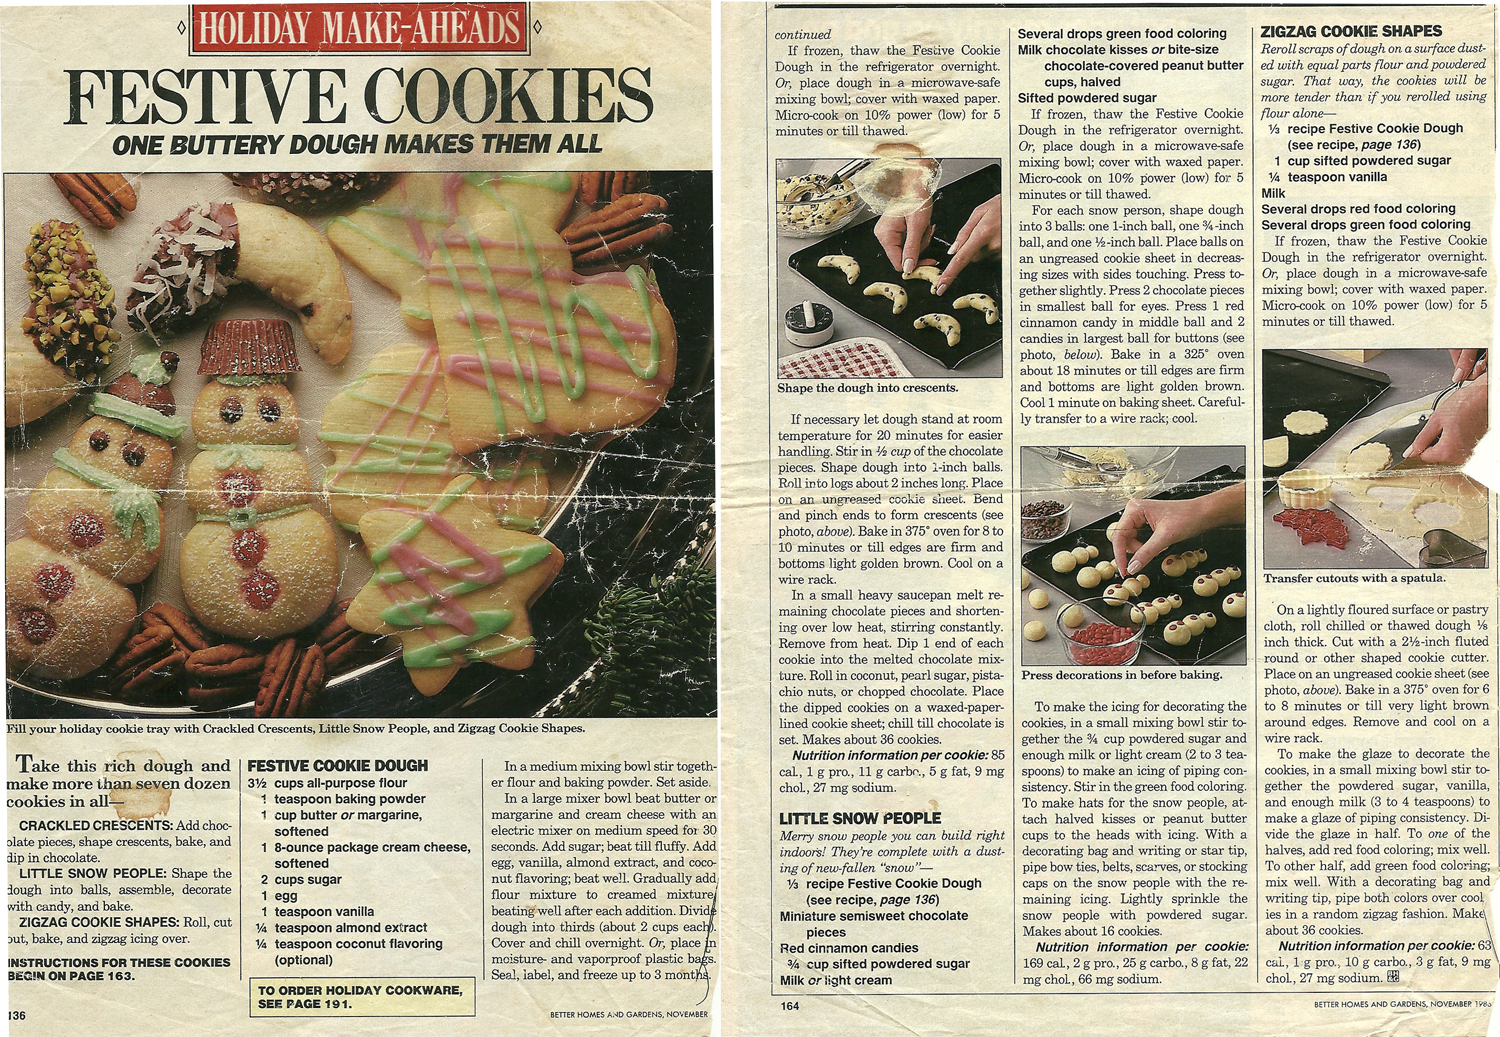 Festive-Cookie-Dough,-Better-Homes-and-Gardens,-November-1986